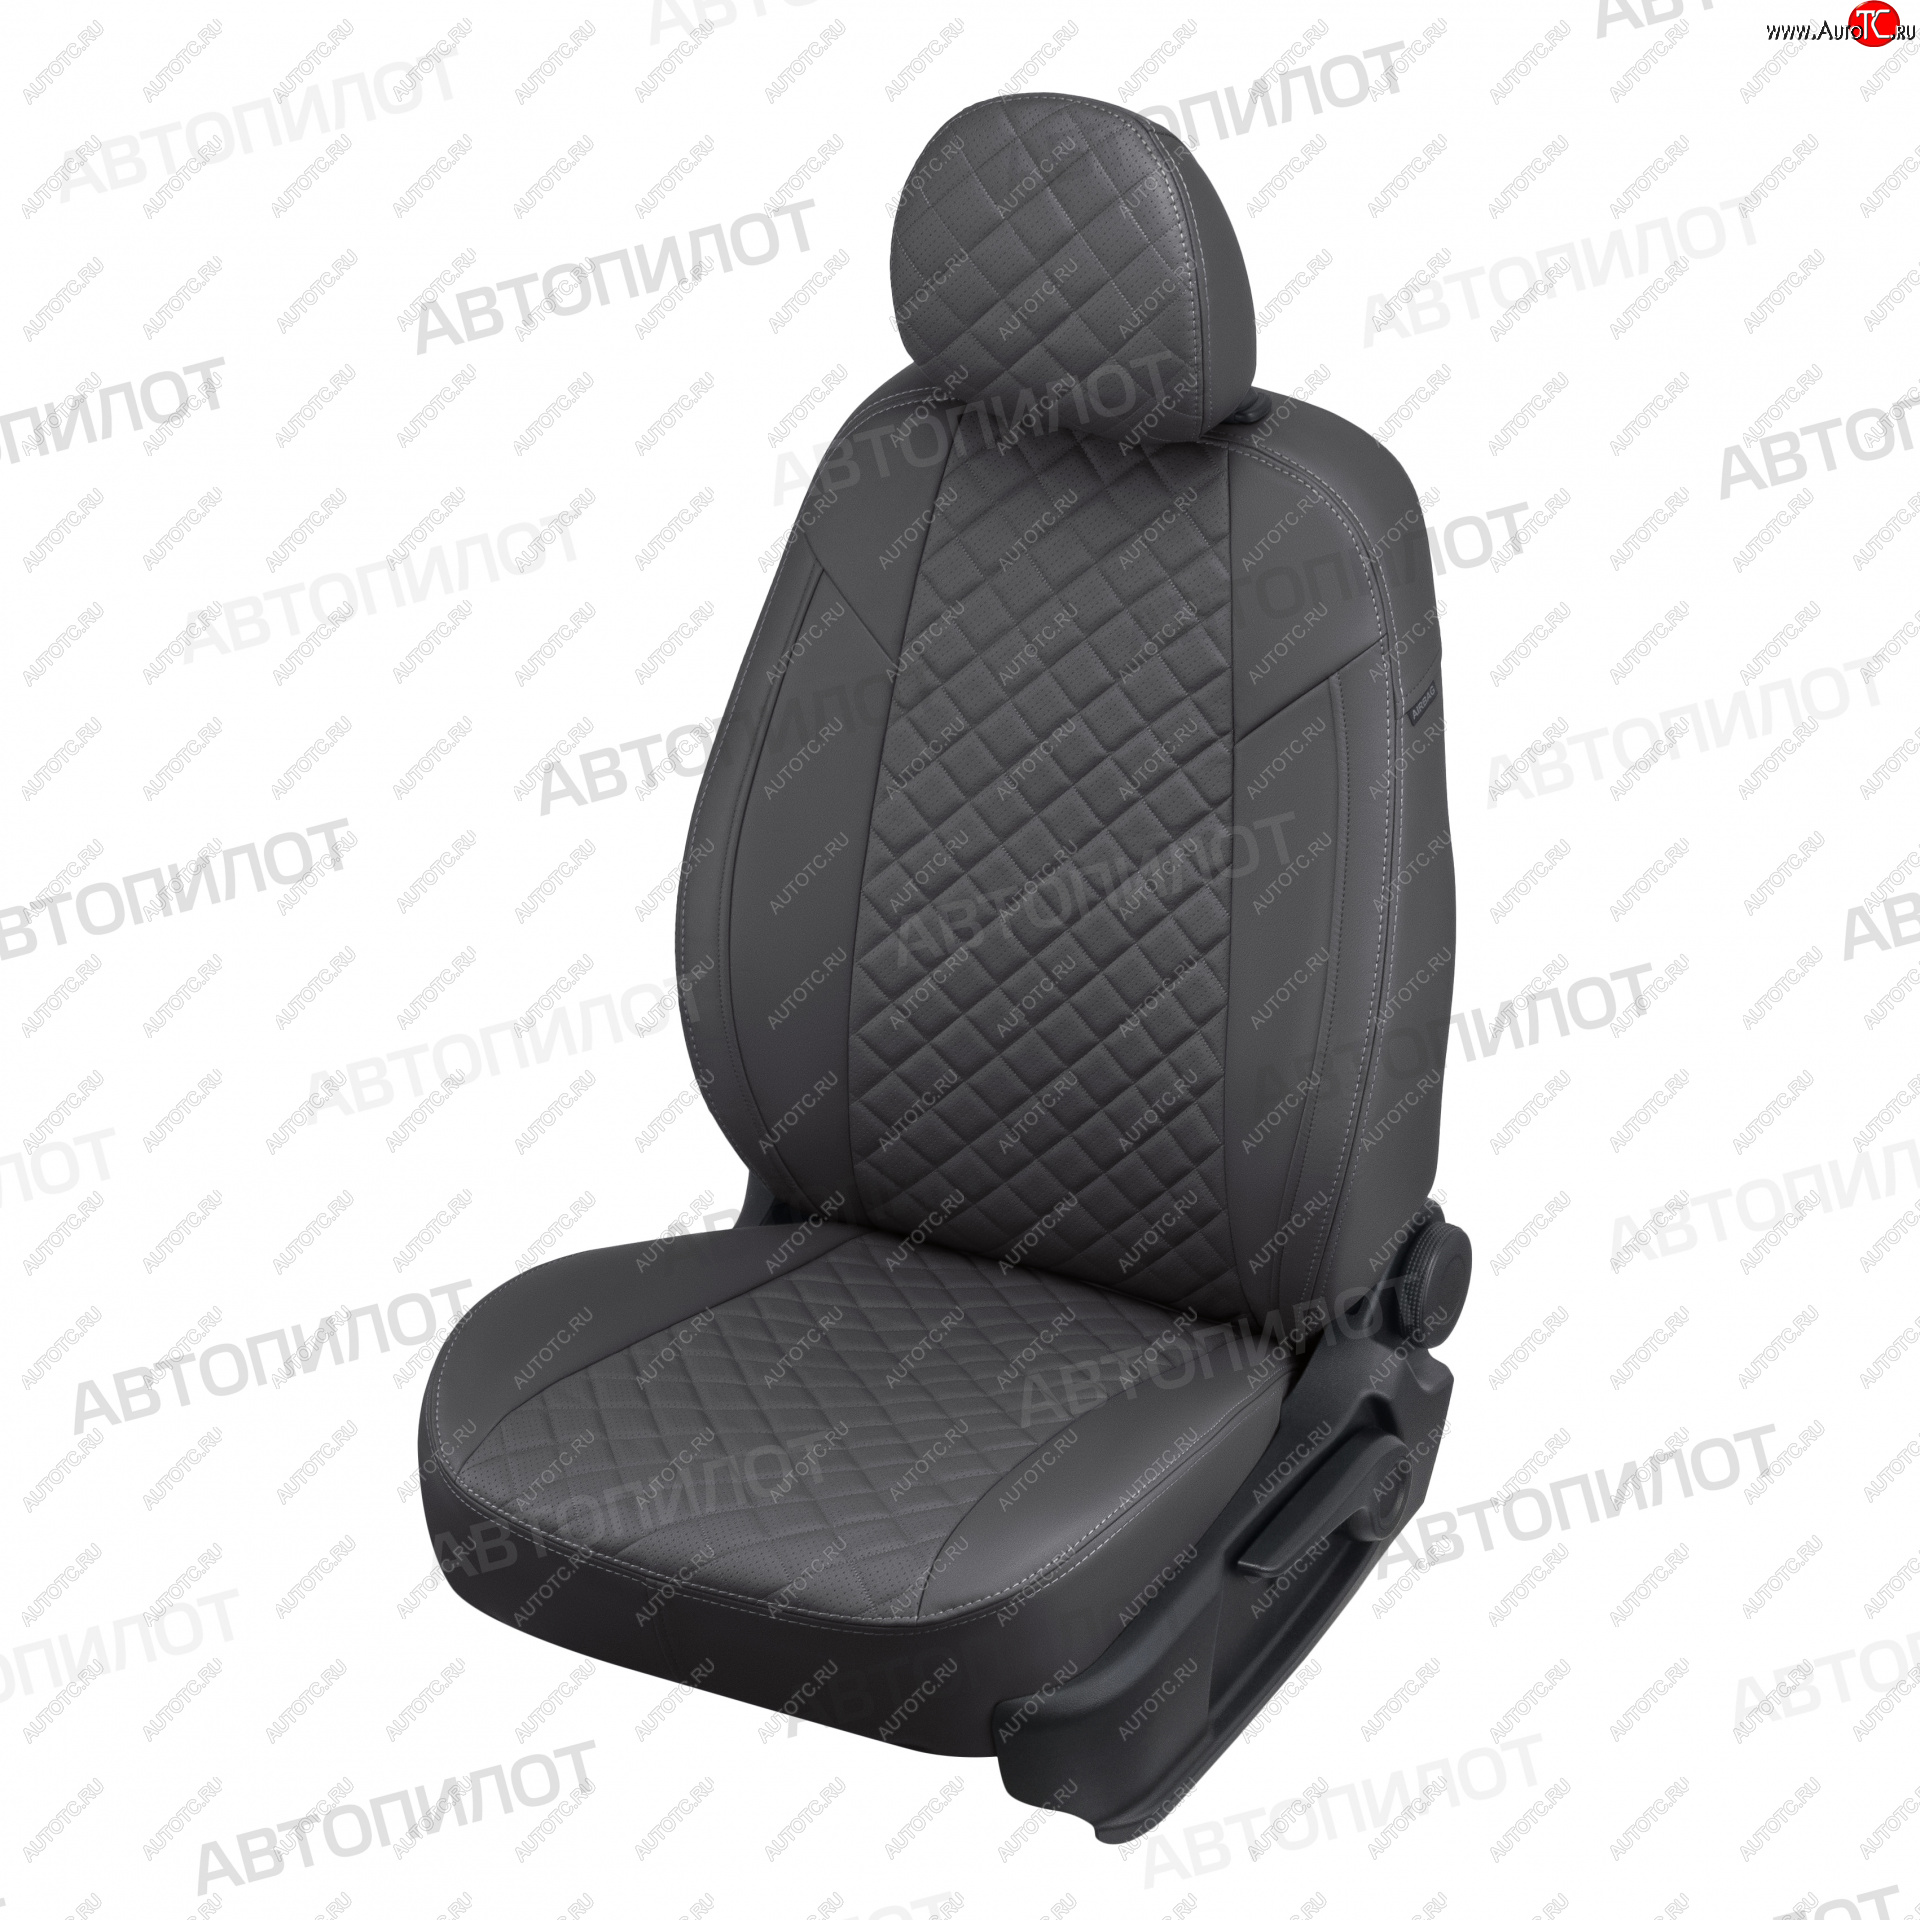 13 999 р. Чехлы сидений (экокожа, S-Line) Автопилот Ромб  Audi Q5  8R (2008-2017) (темно-серый)